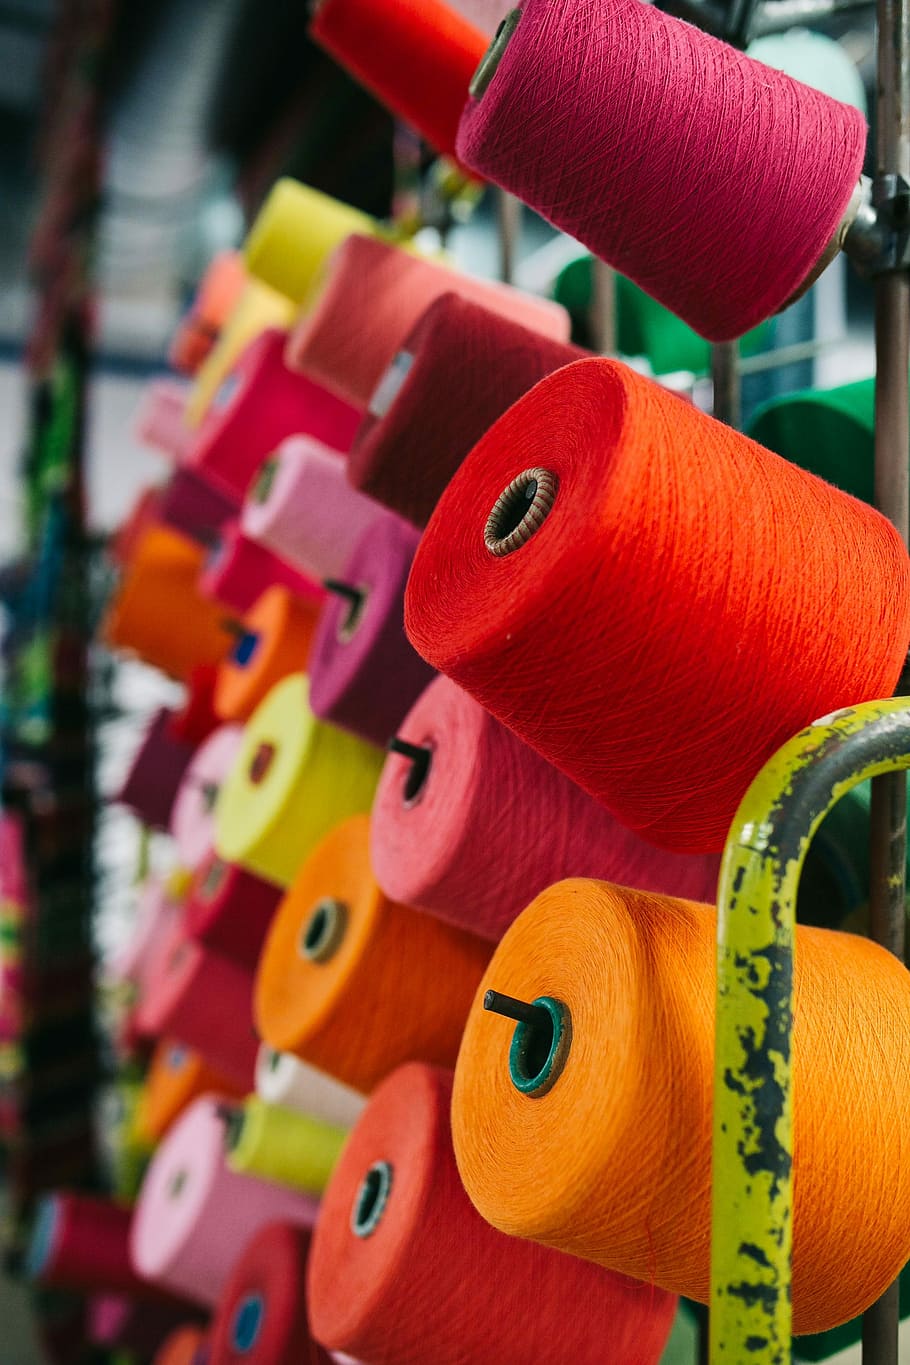 berwarna-warni, jahit benang, Besar, Kumparan, Thread, Jahit, hobi, warna, kerajinan, tekstil